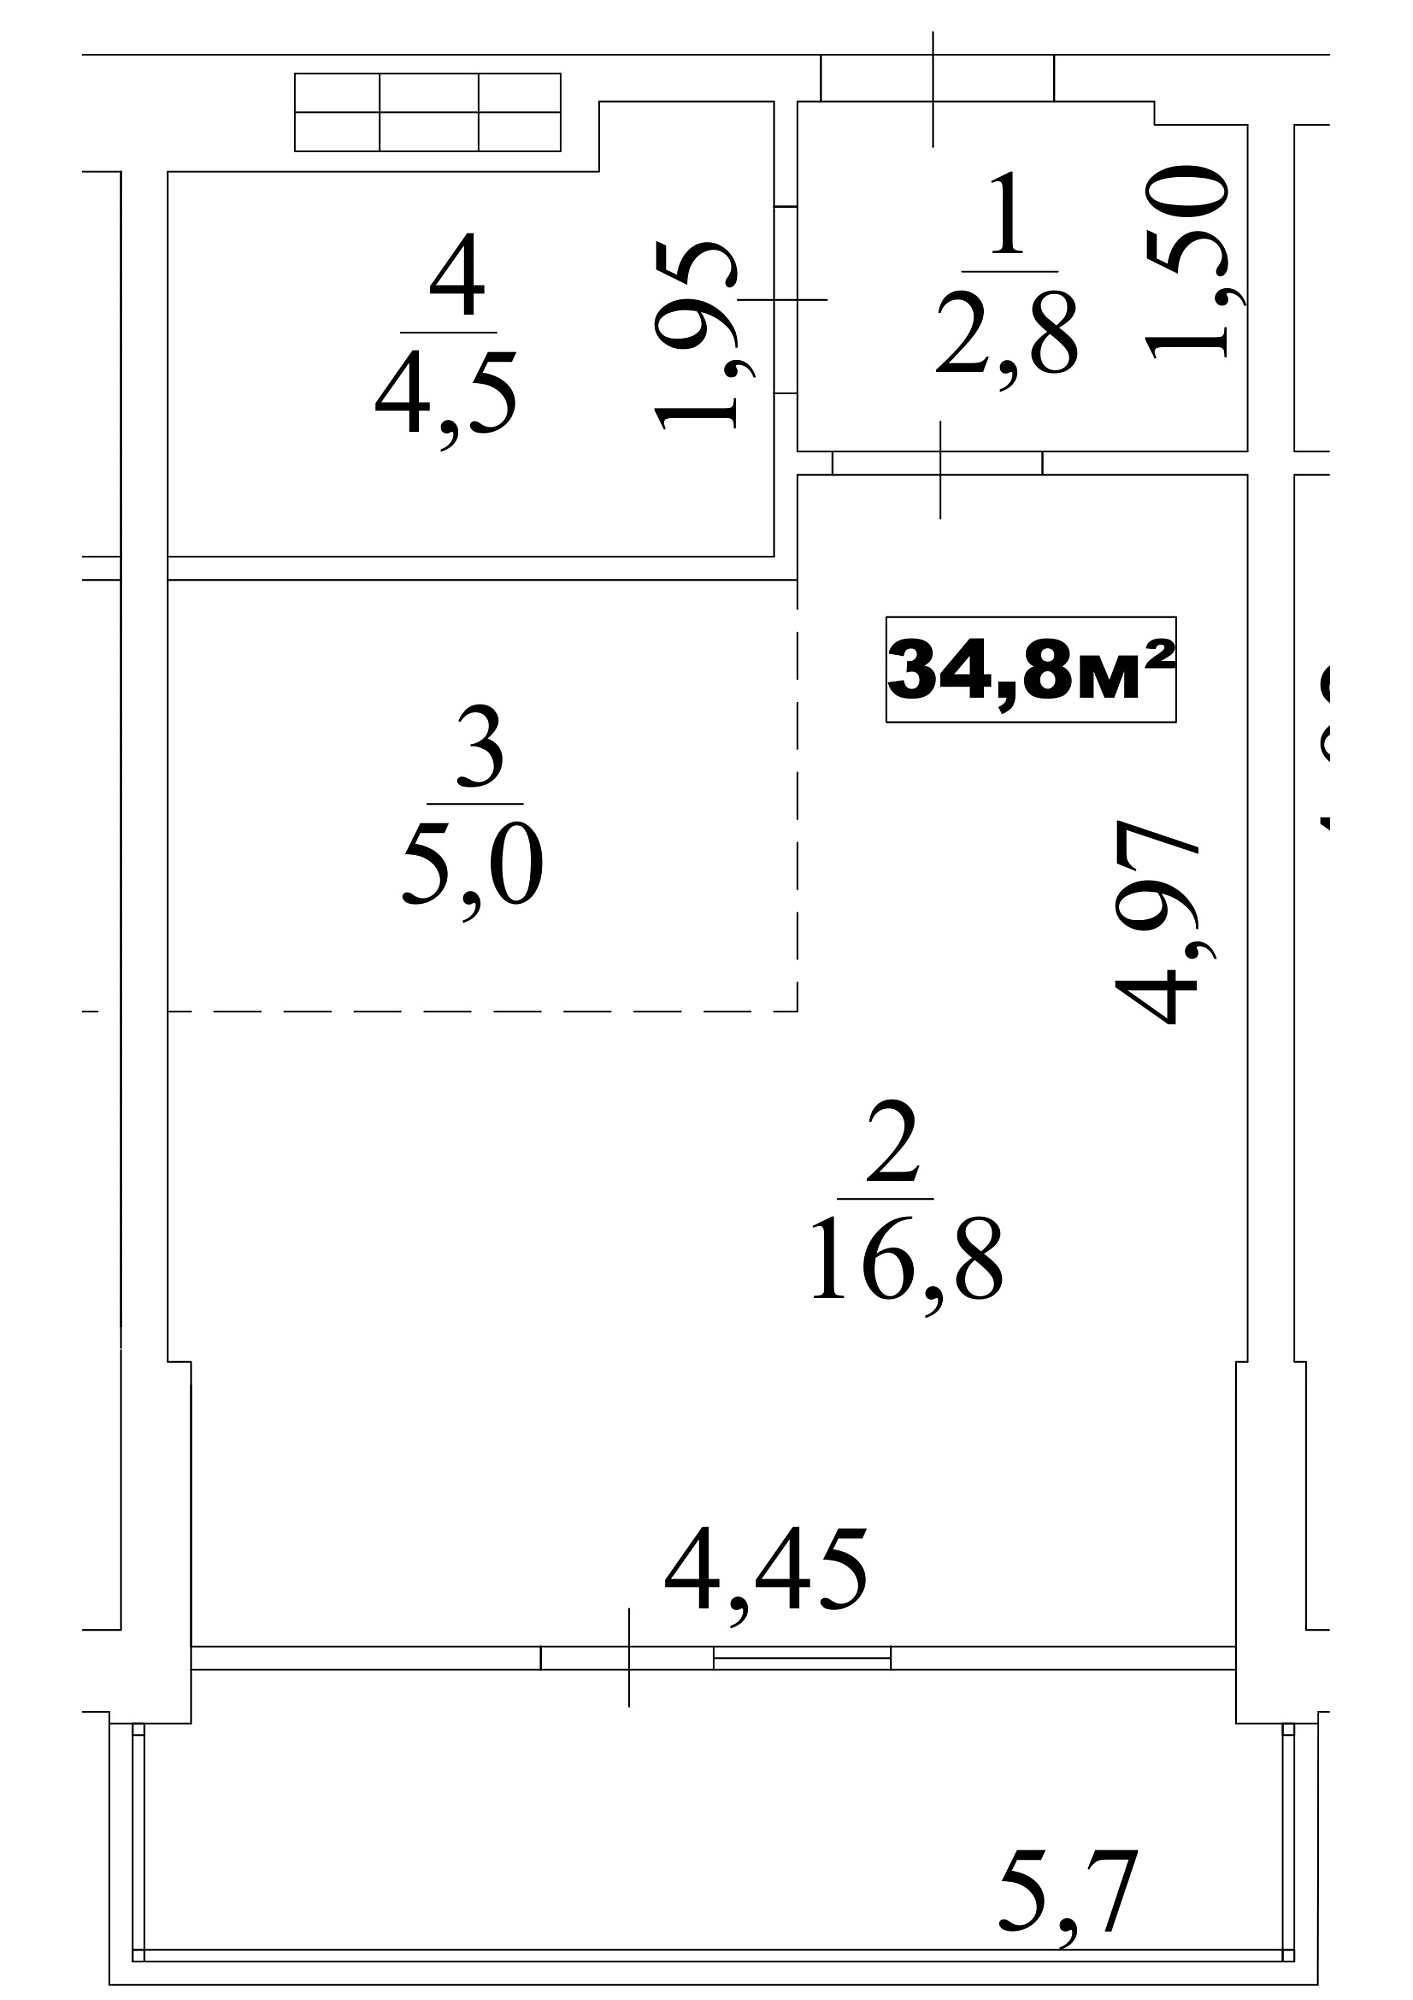 Planning Smart flats area 34.8m2, AB-10-10/0082б.